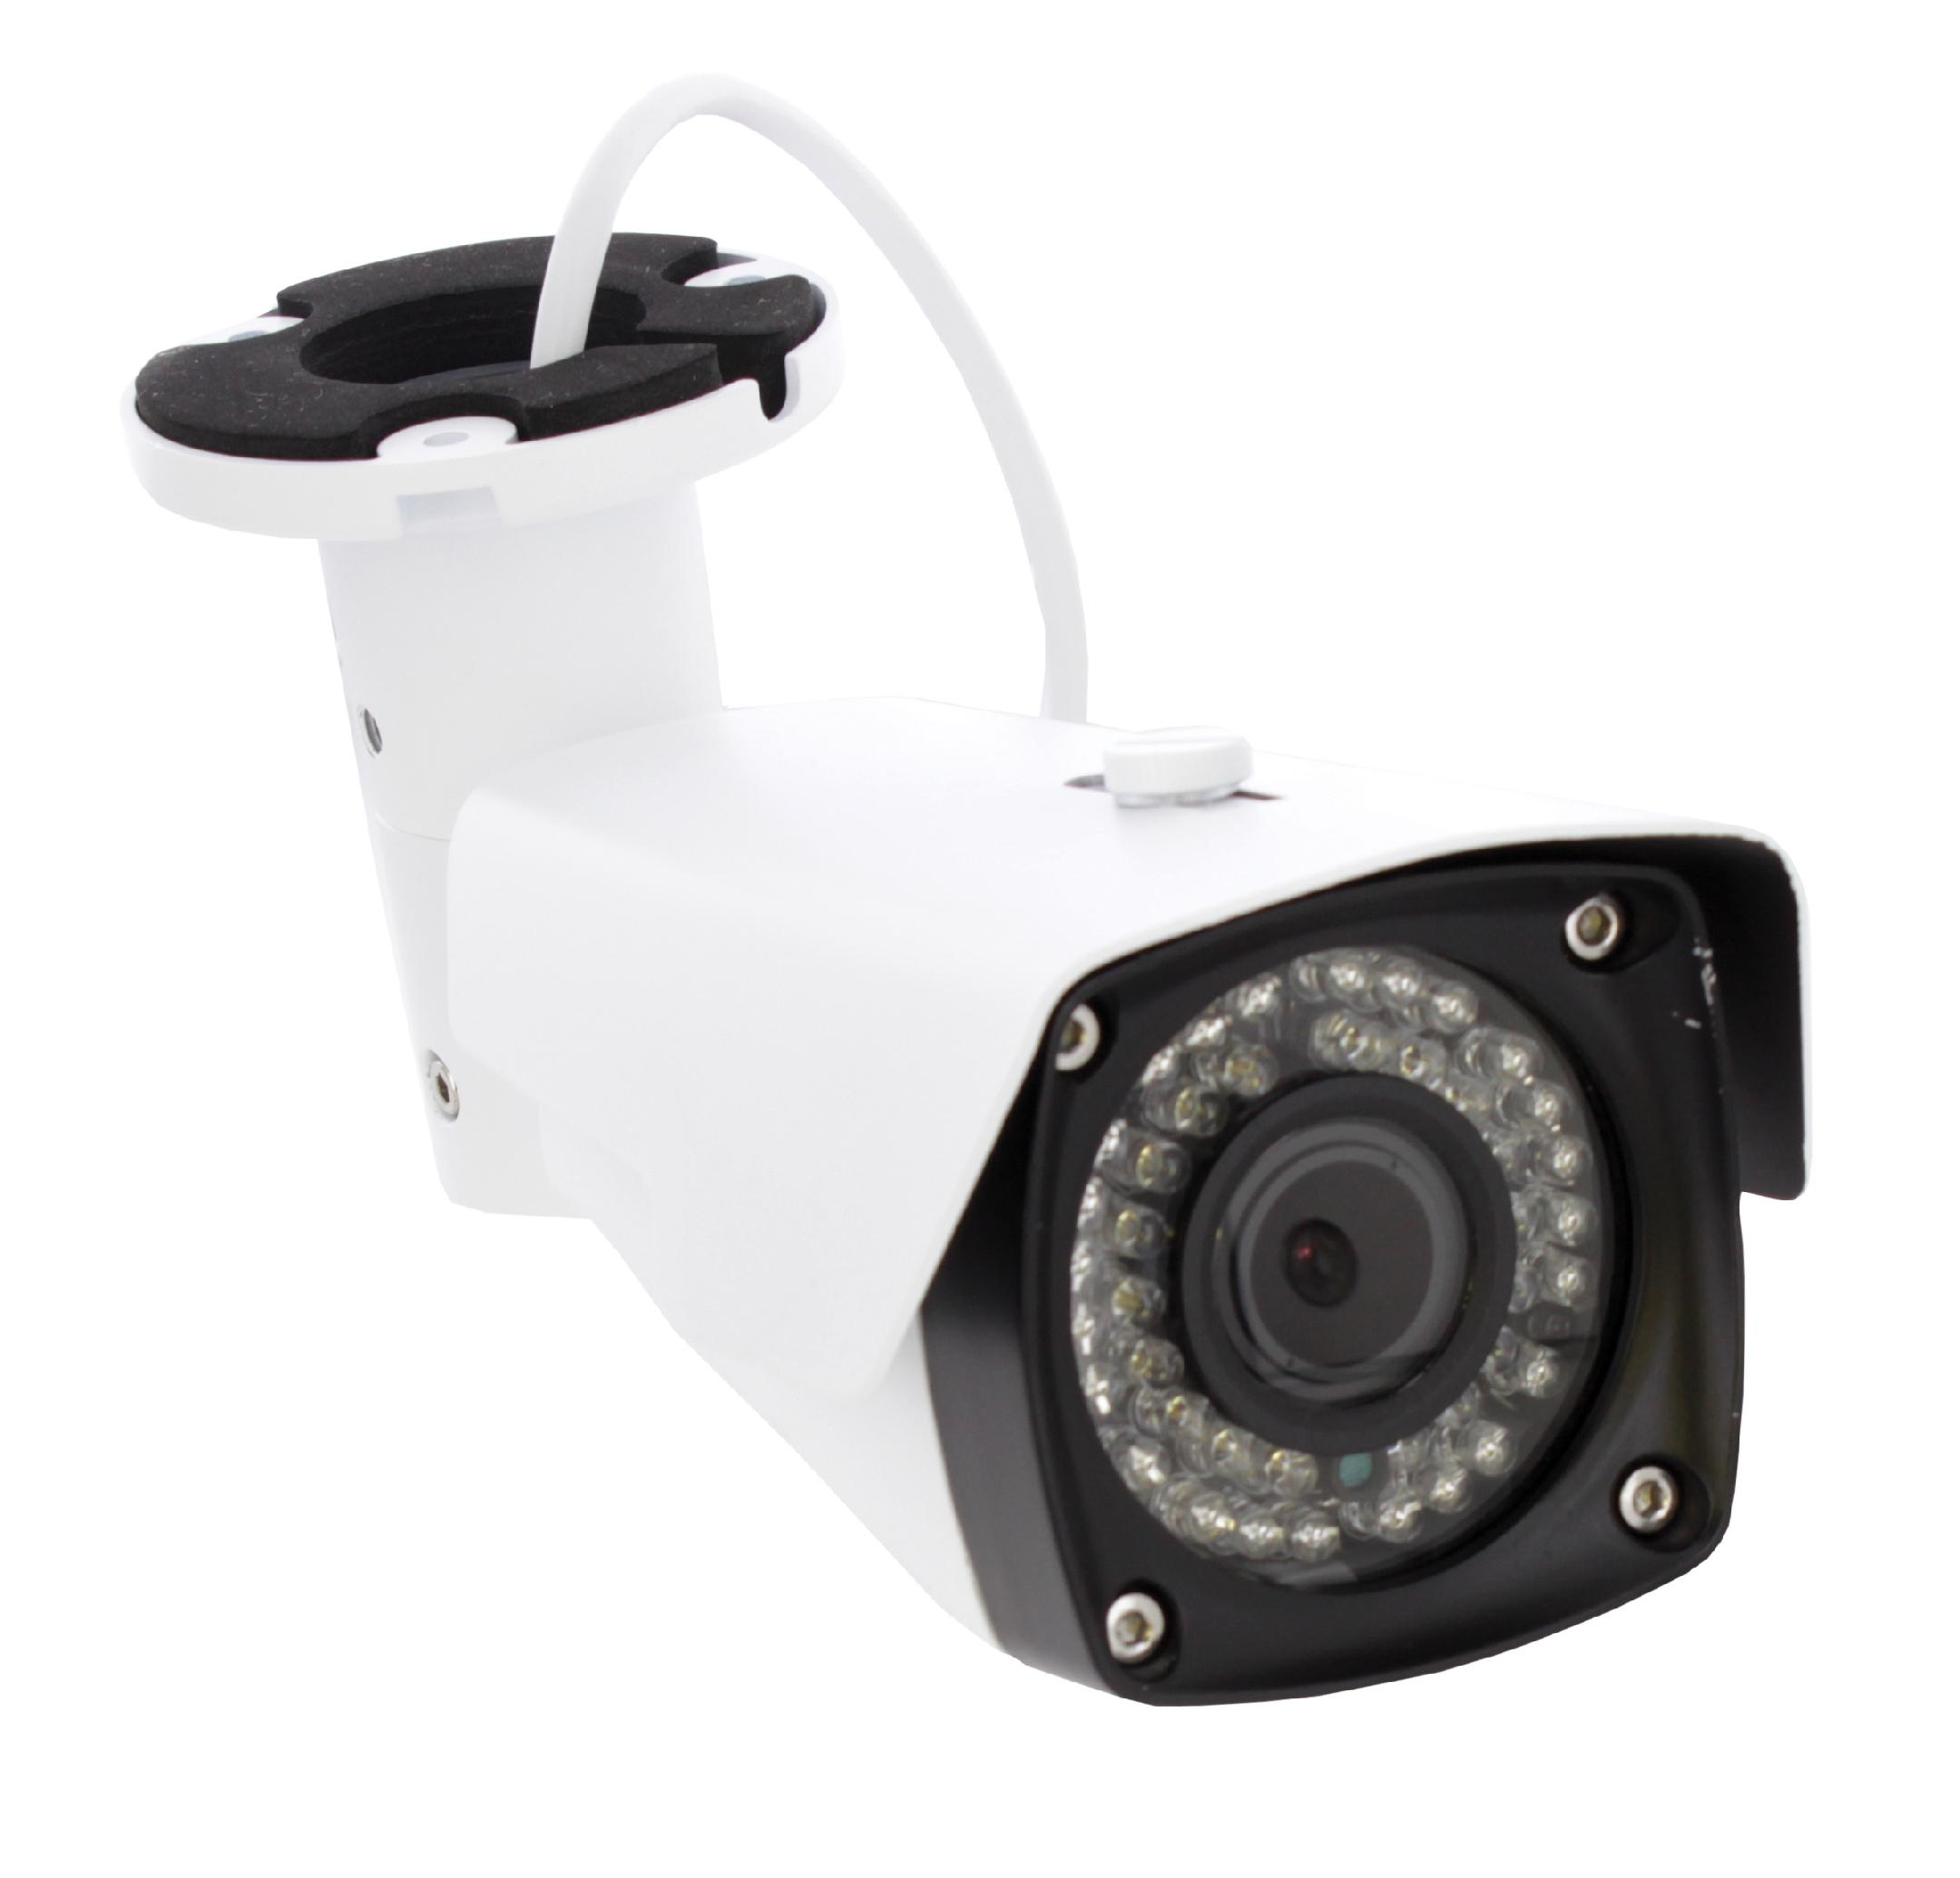 Камера друг. Onvif камера 3g с аккумулятором. Разъем камеры MPX ip2120.